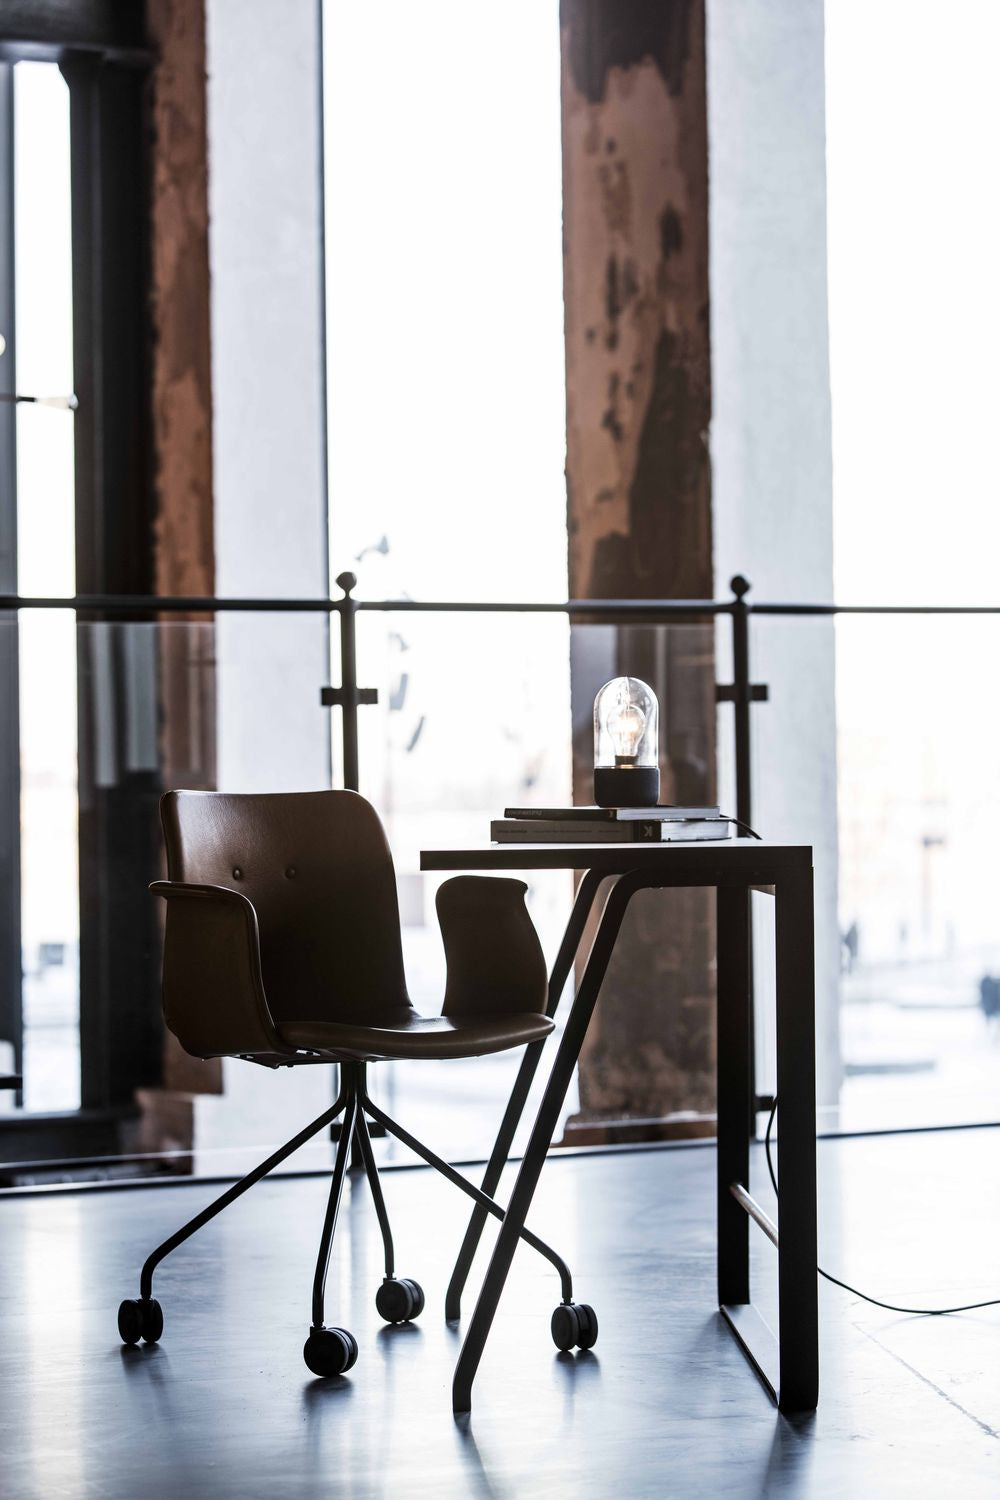 Bent Hansen Primum Chair With Armrests Black Swivel Frame, Tartufo Davos Leather